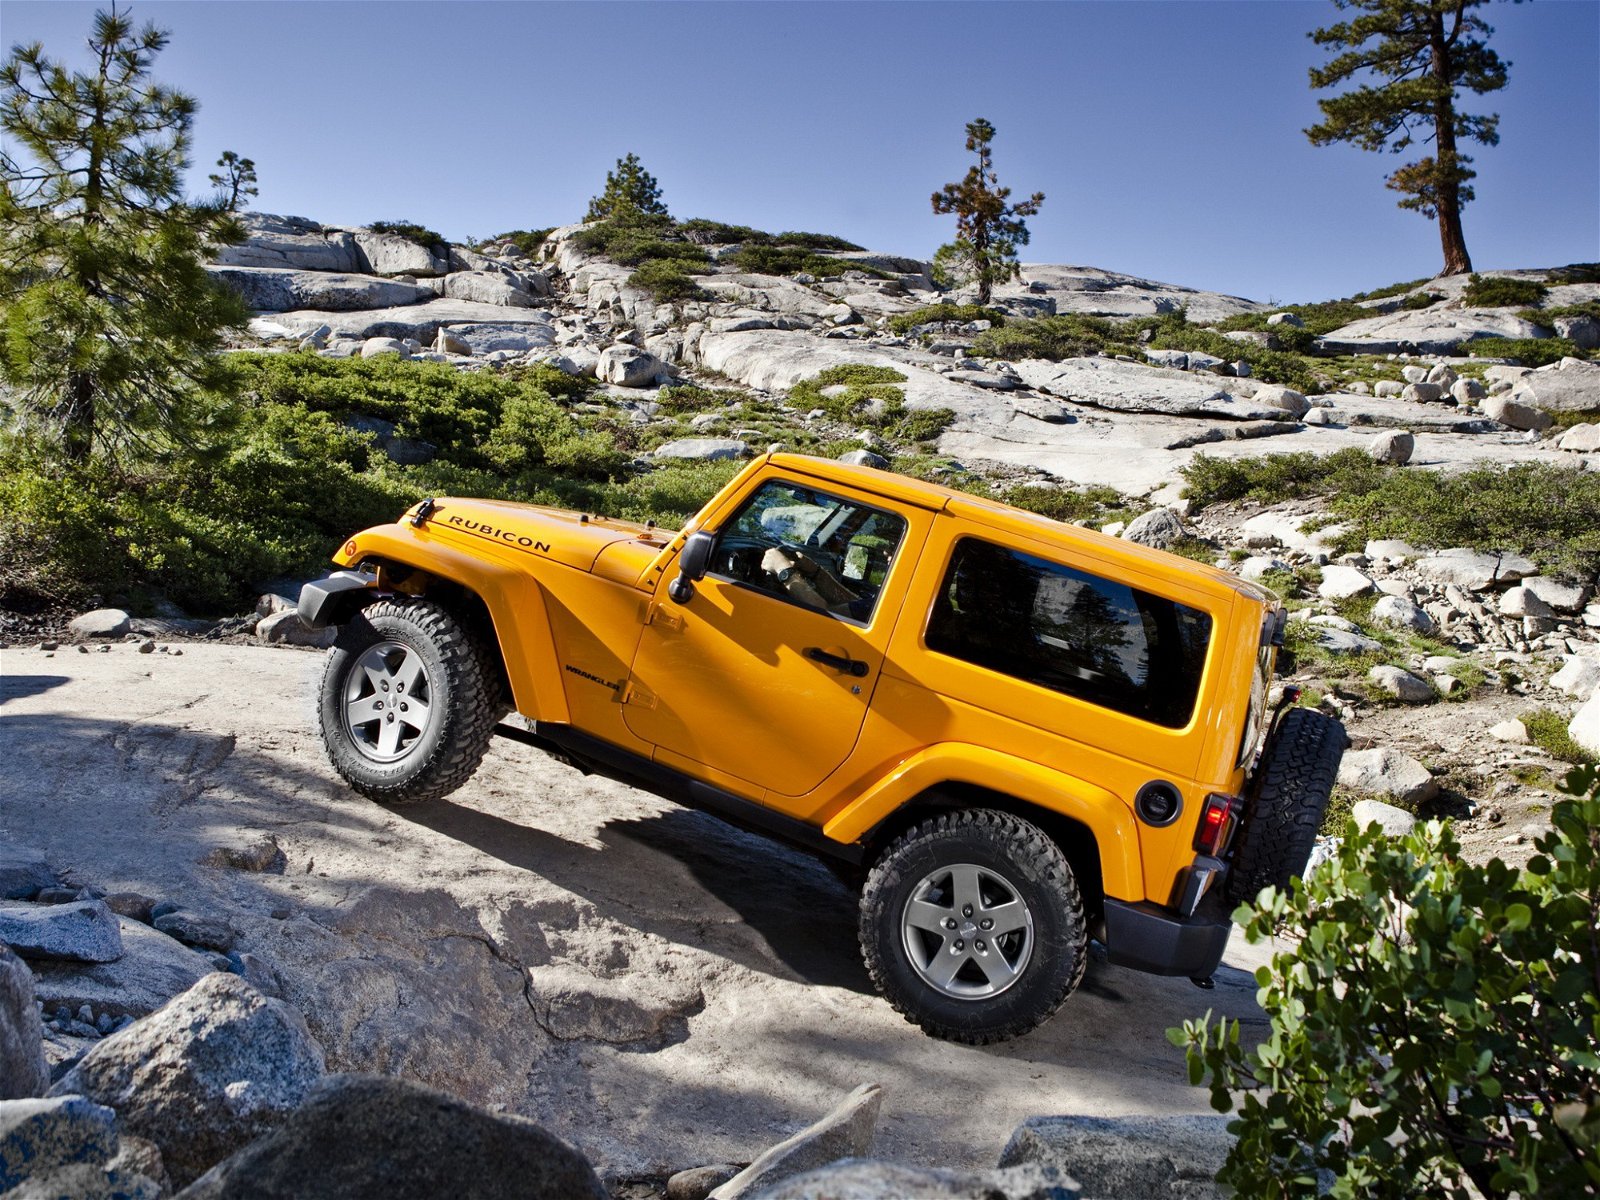 Jeep Wrangler JK (2007-present): Review, Problems, Specs | DriveMag Cars